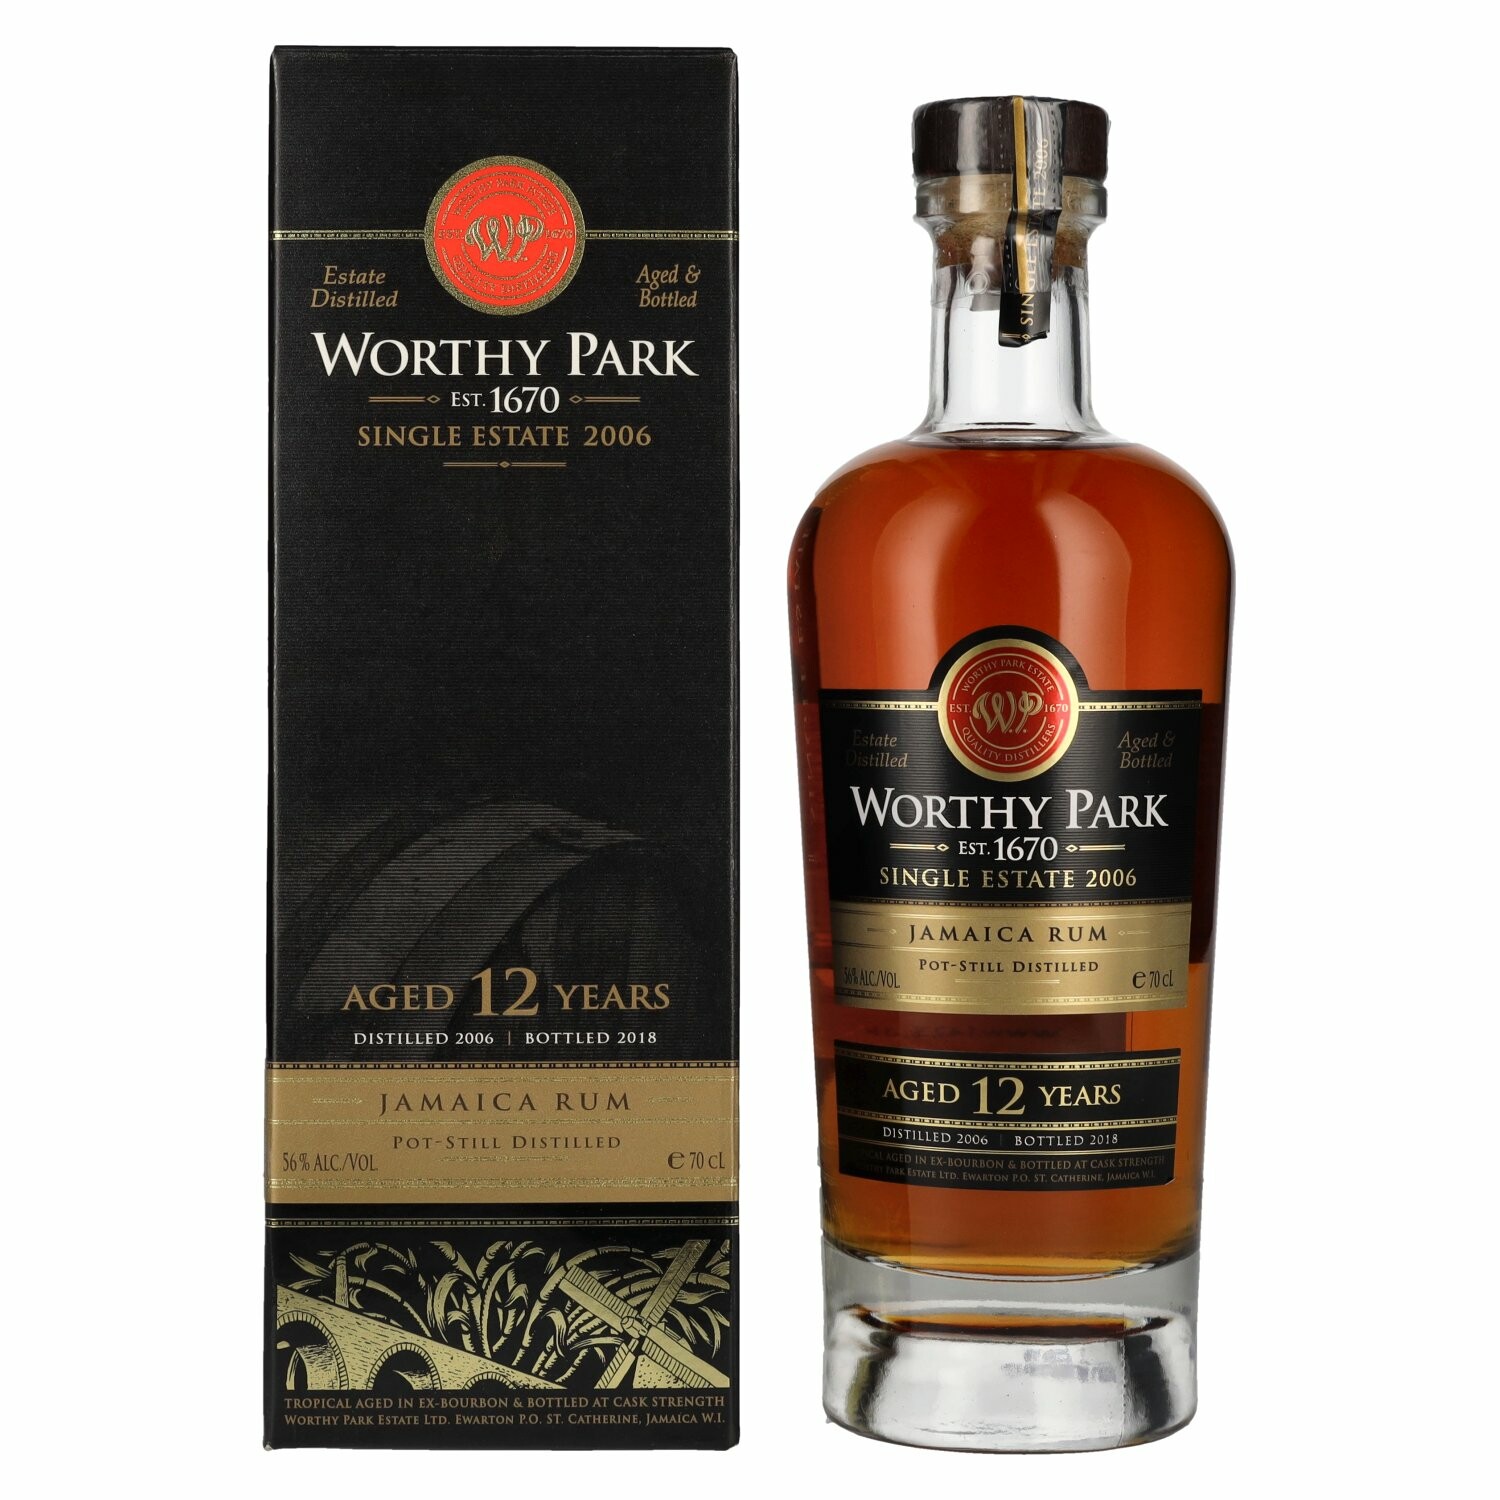 Worthy Park 12 Years Old Single Estate Jamaica Rum 2006 56% Vol. 0,7l in Giftbox